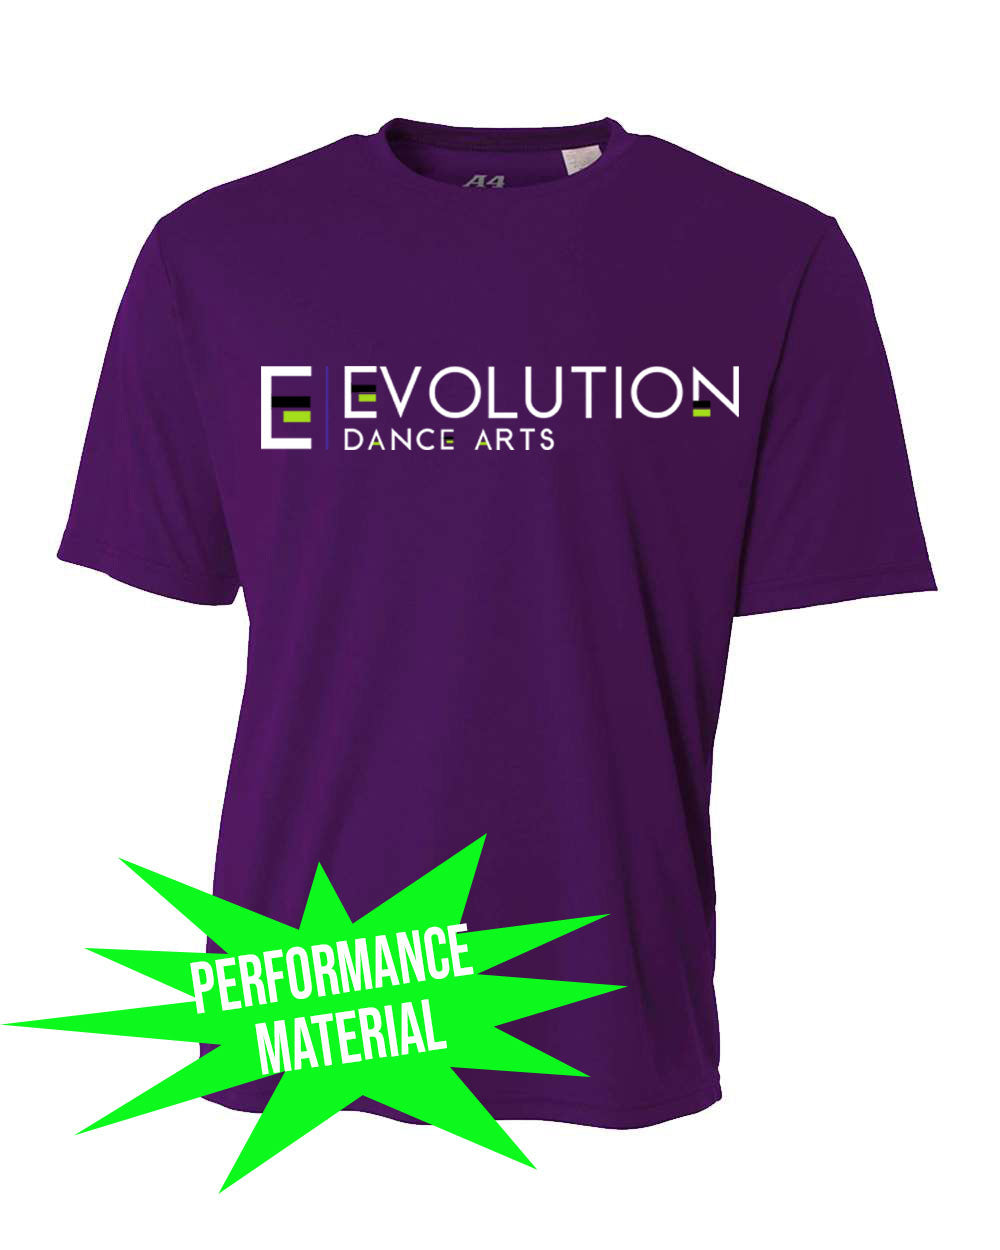 Evolution Dance Arts Performance Material design 1 T-Shirt